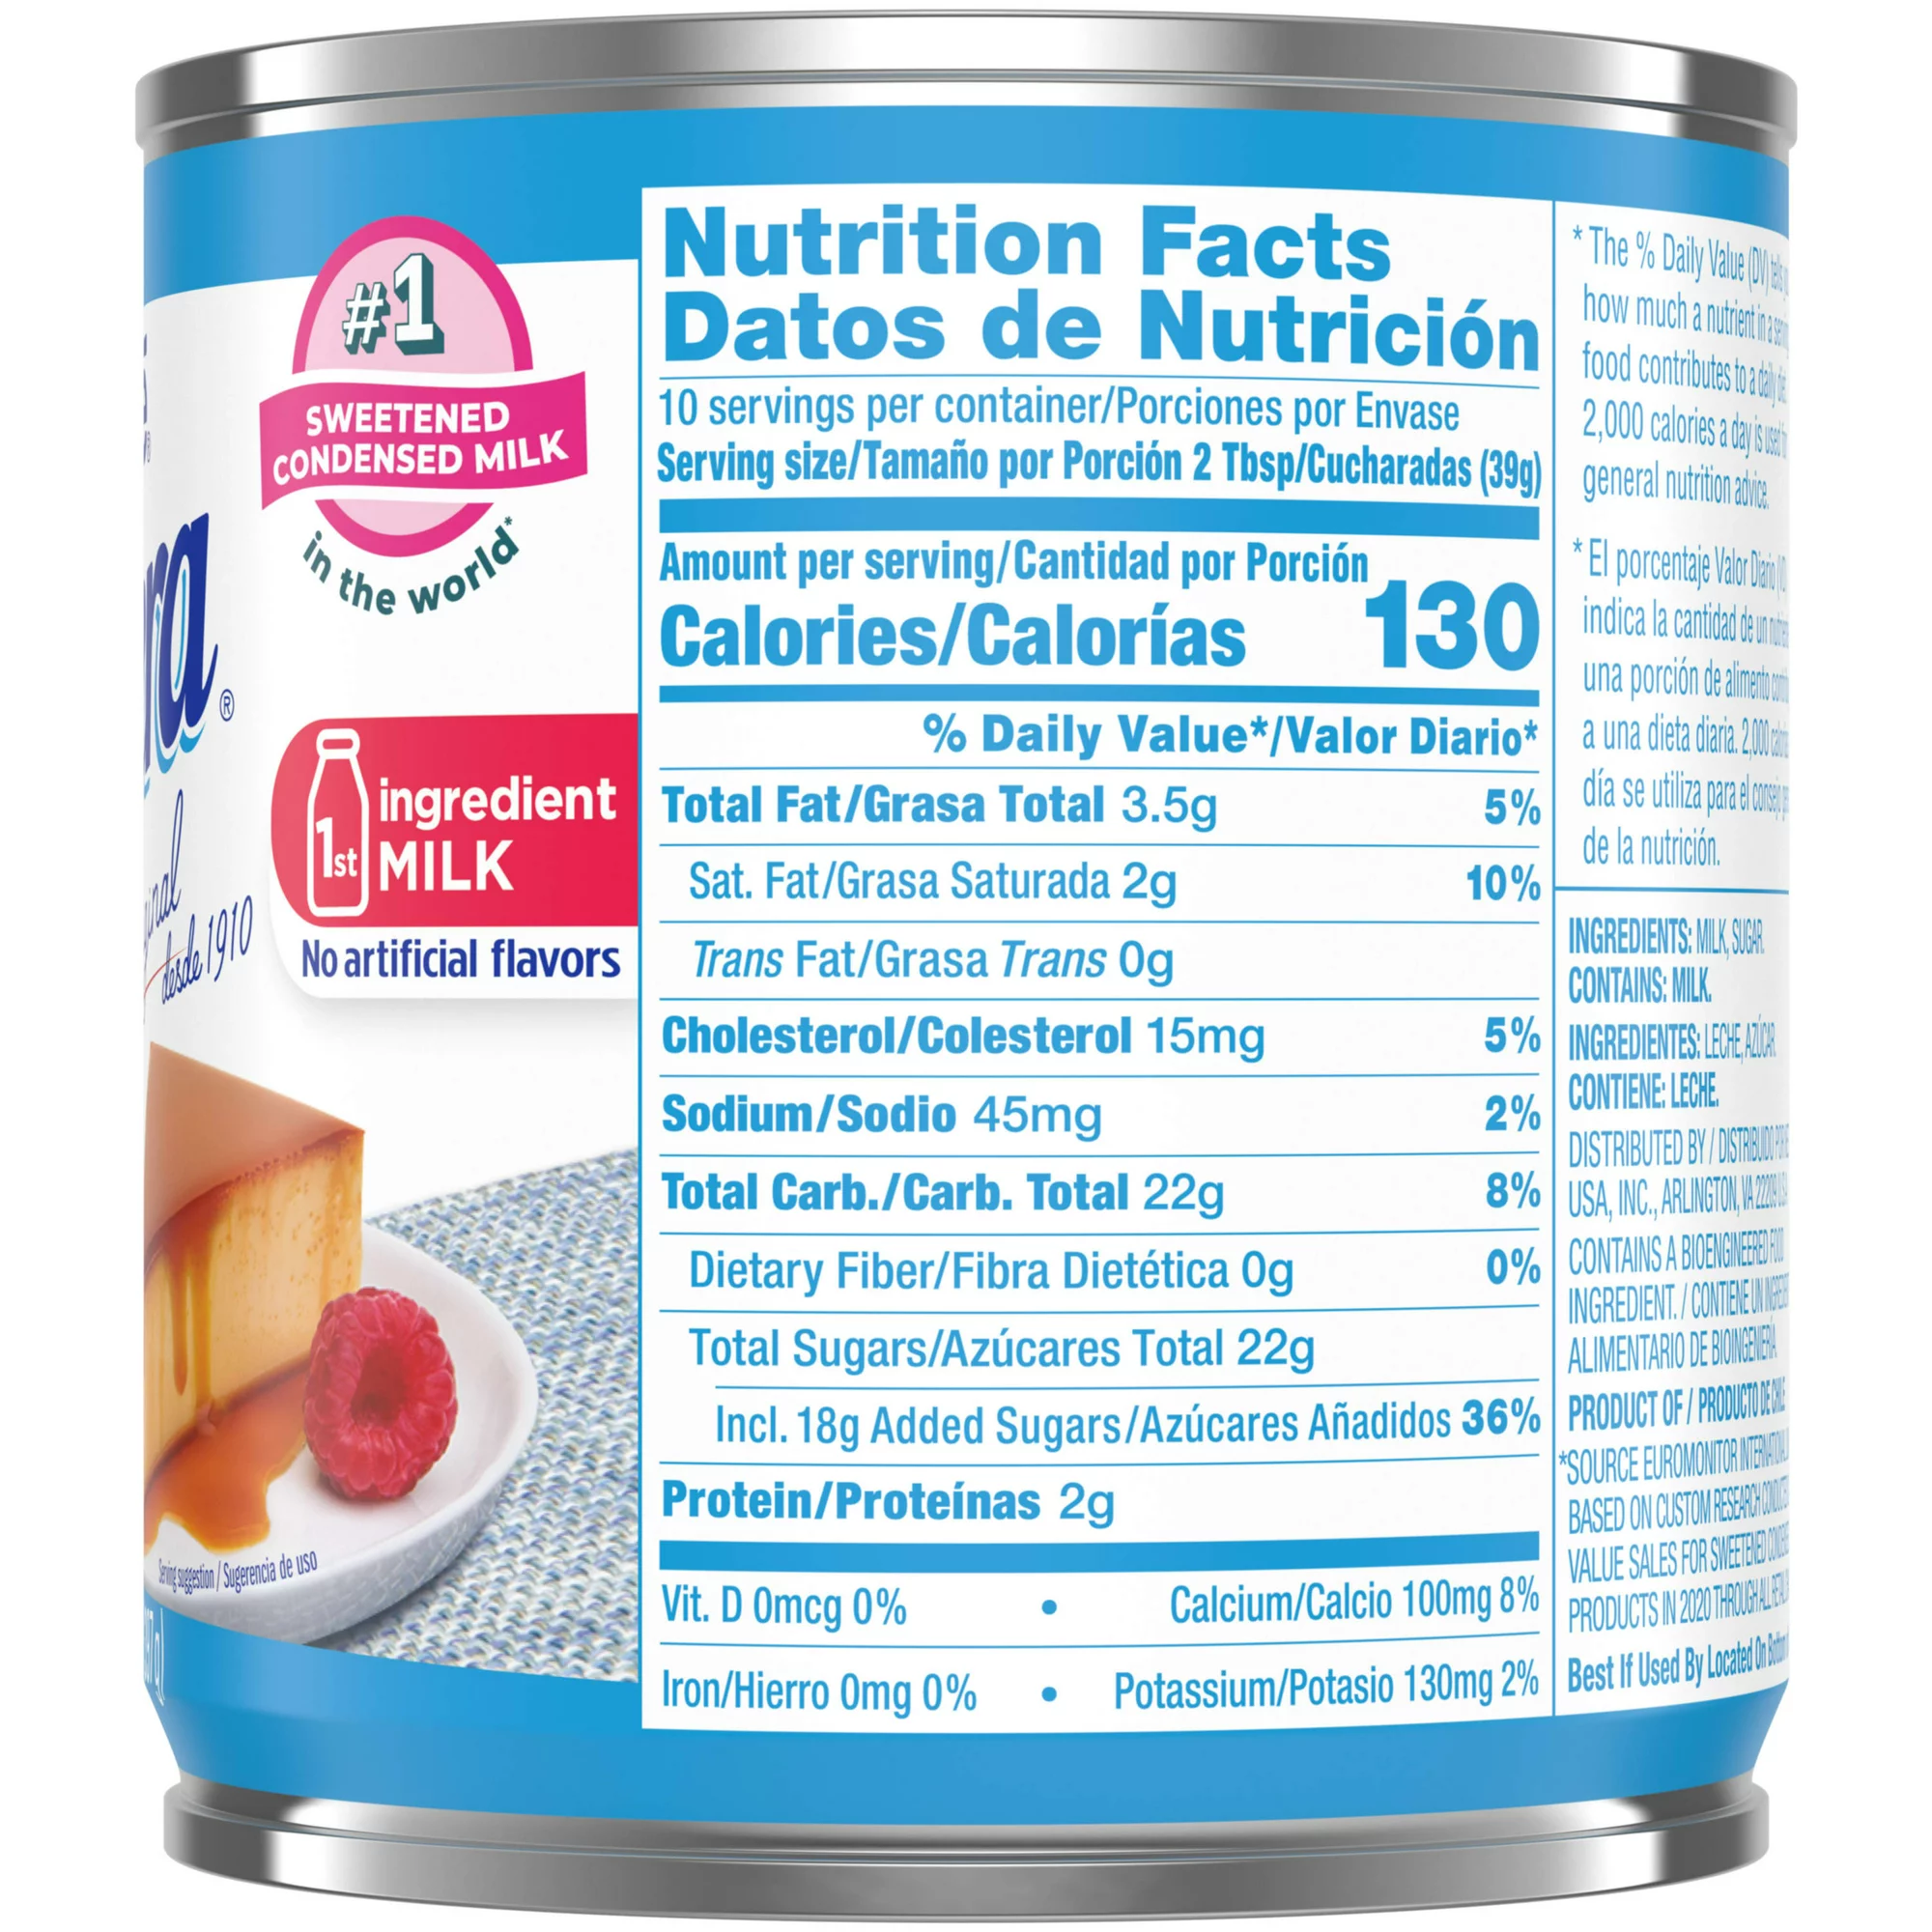 Nestle Condensed milk nutrition facts.